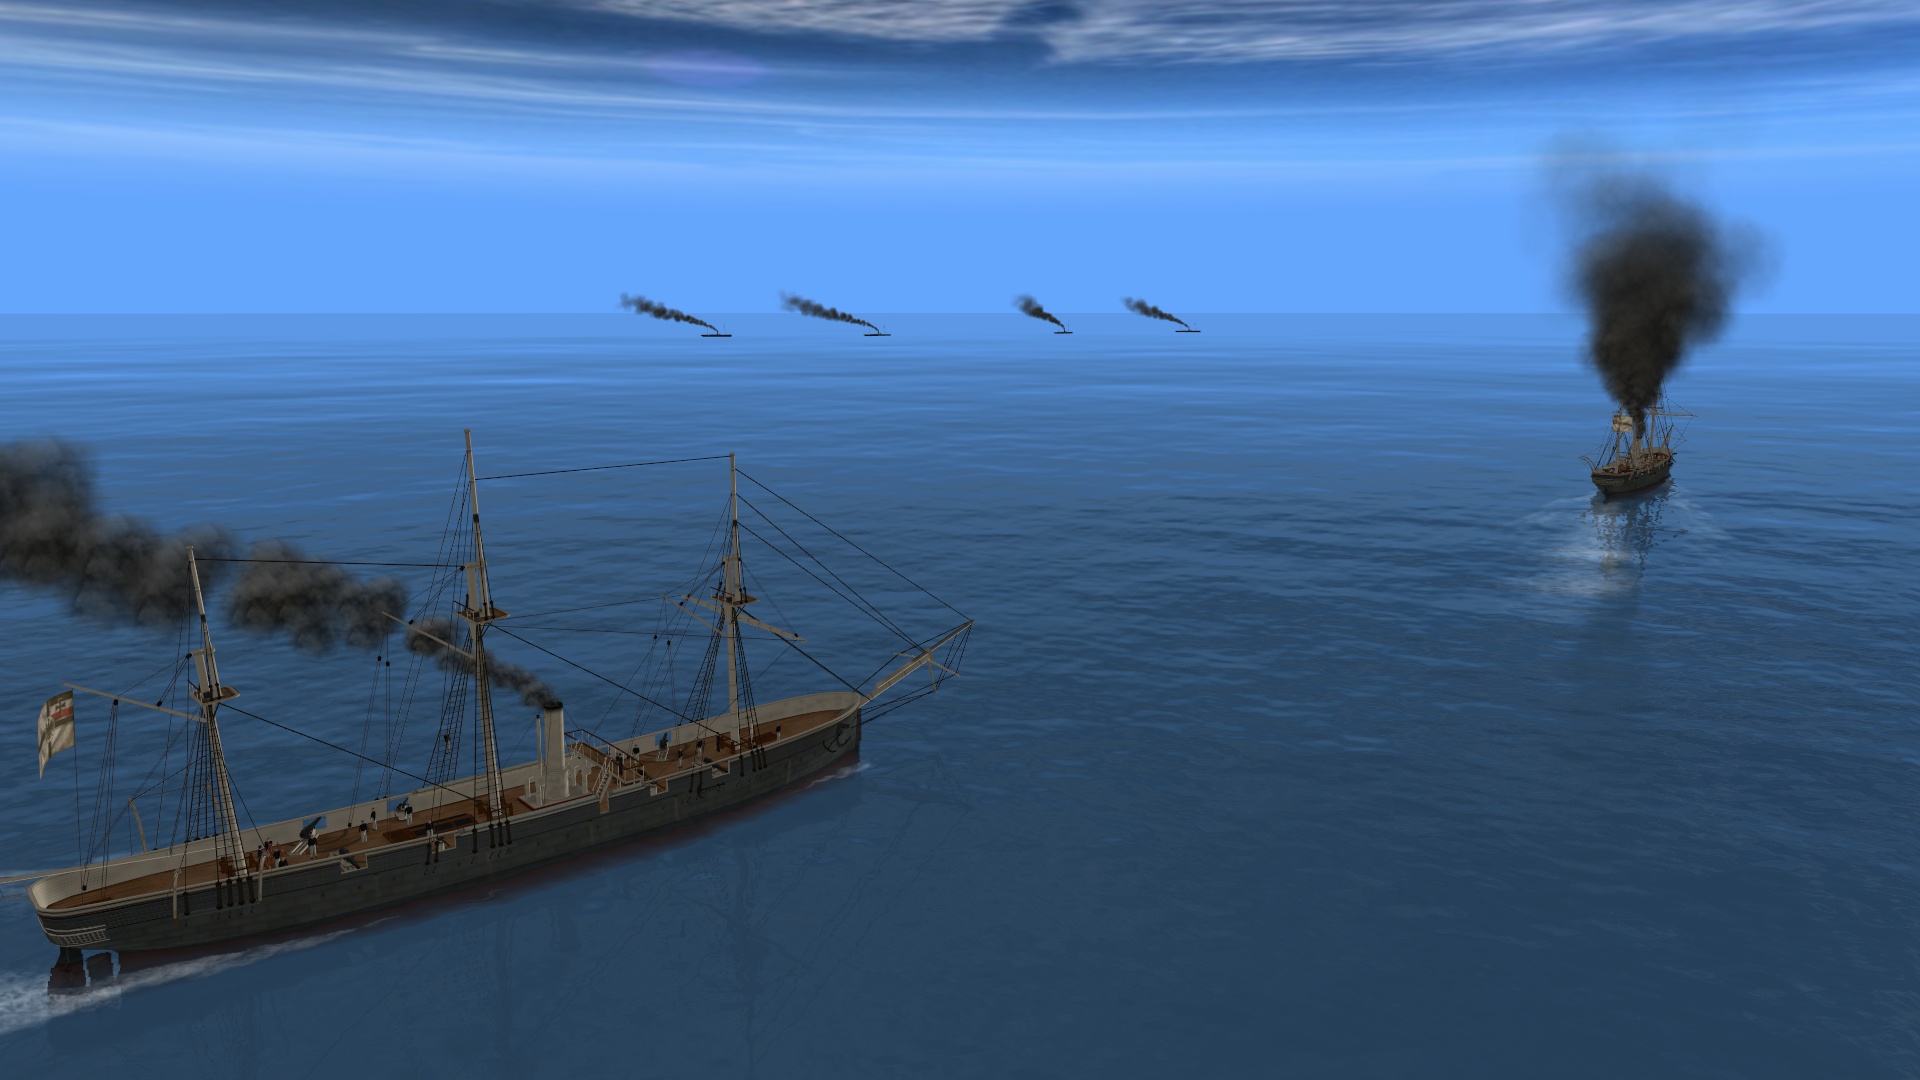 Victorian Admirals screenshot